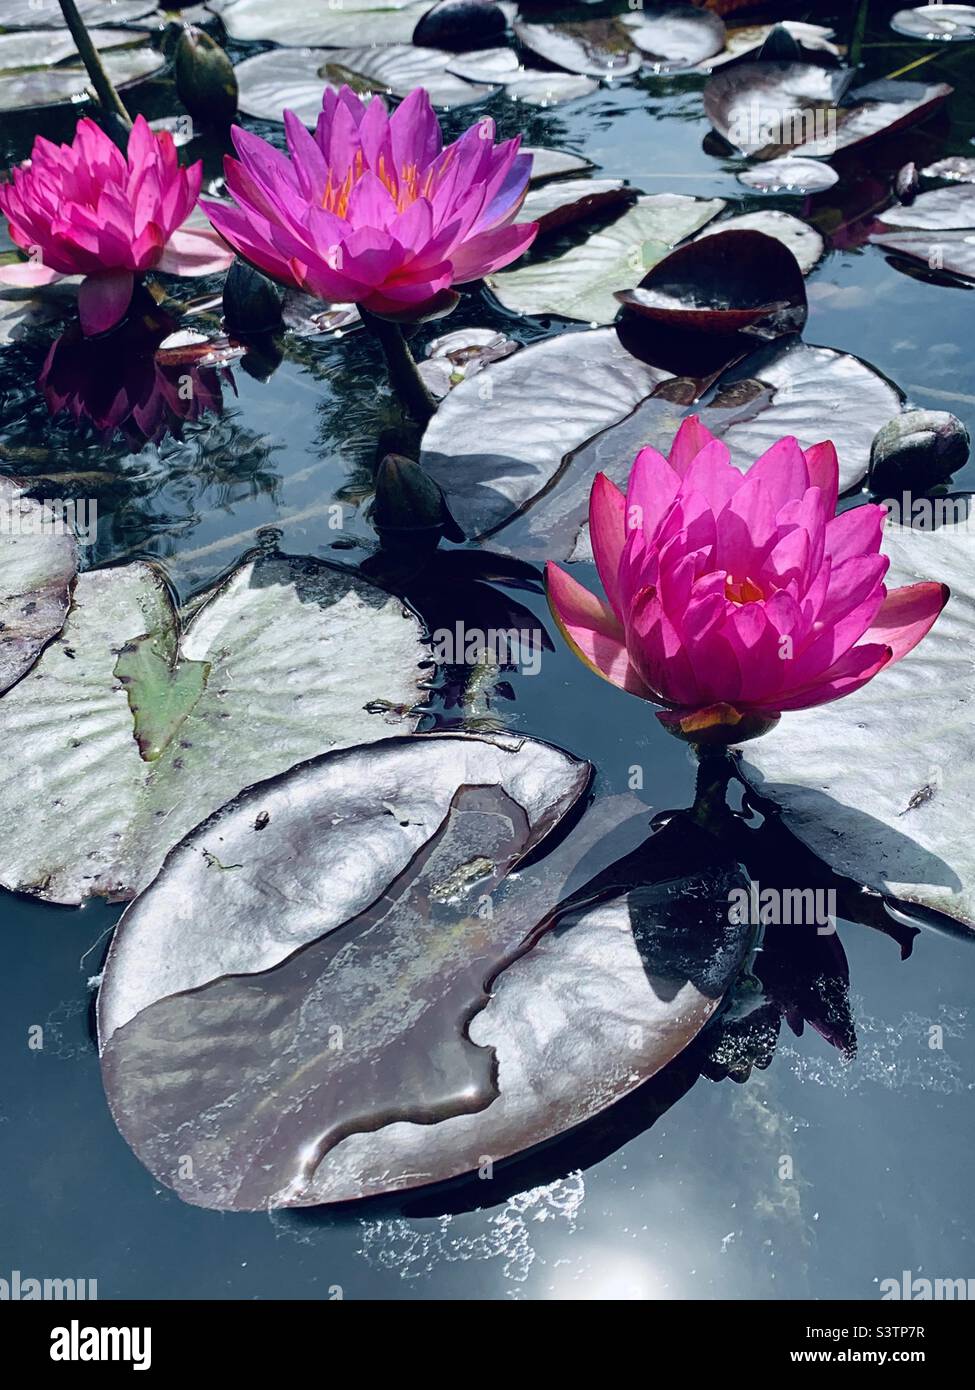 Rose magenta lotus fleurs nénuphars au soleil Banque D'Images